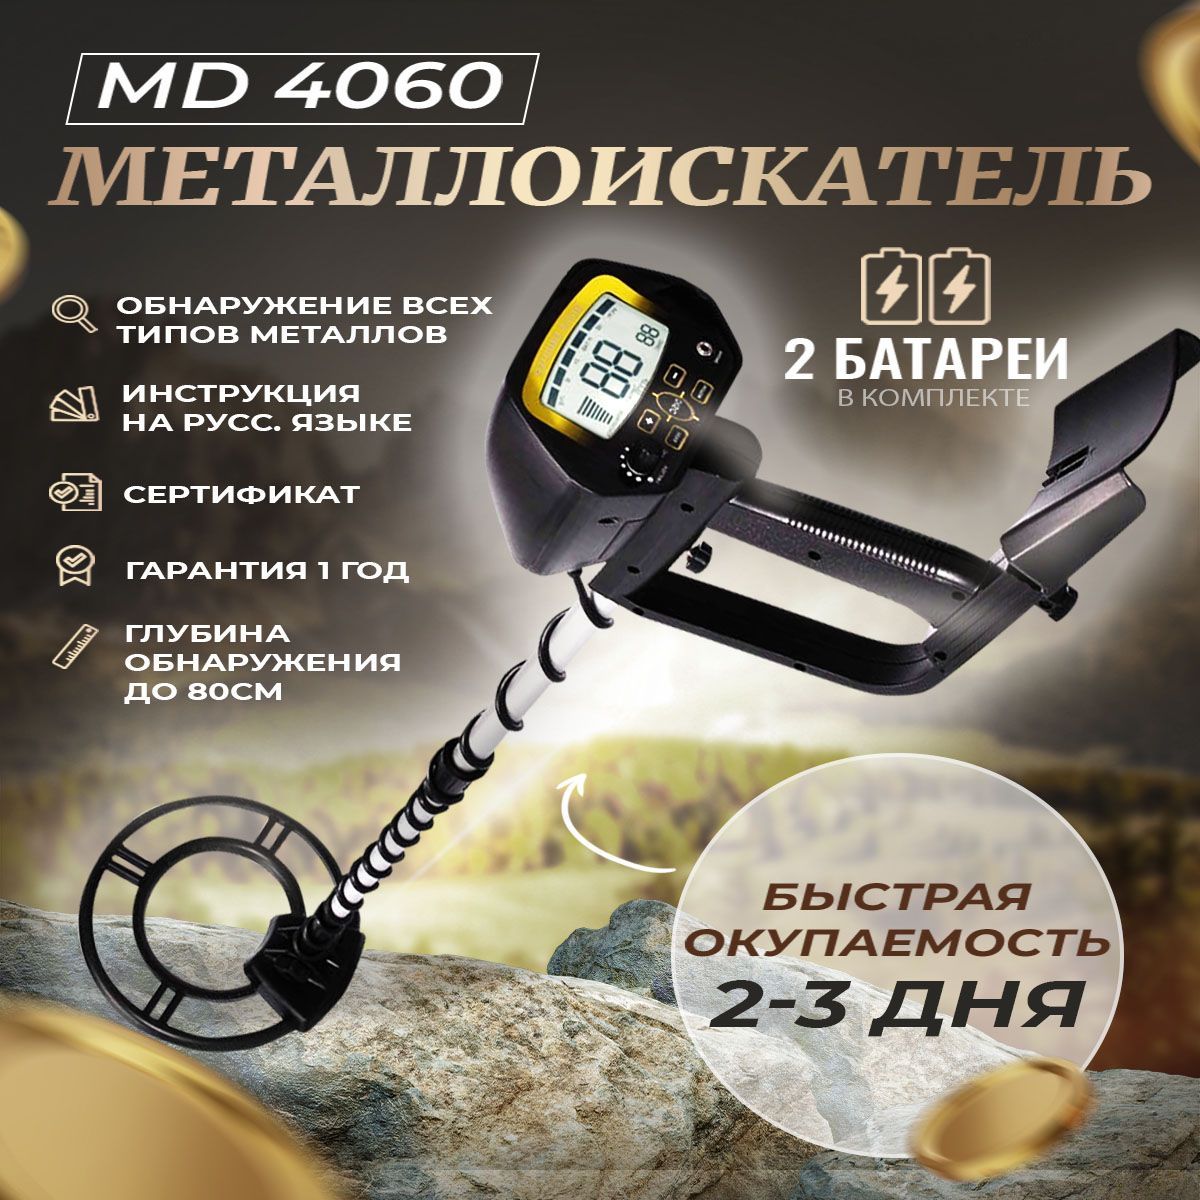 Металлоискатель MD 4060. Md4060. Nexmor металлоискатель цена. Металлоискатель nexmor инструкция по эксплуатации.